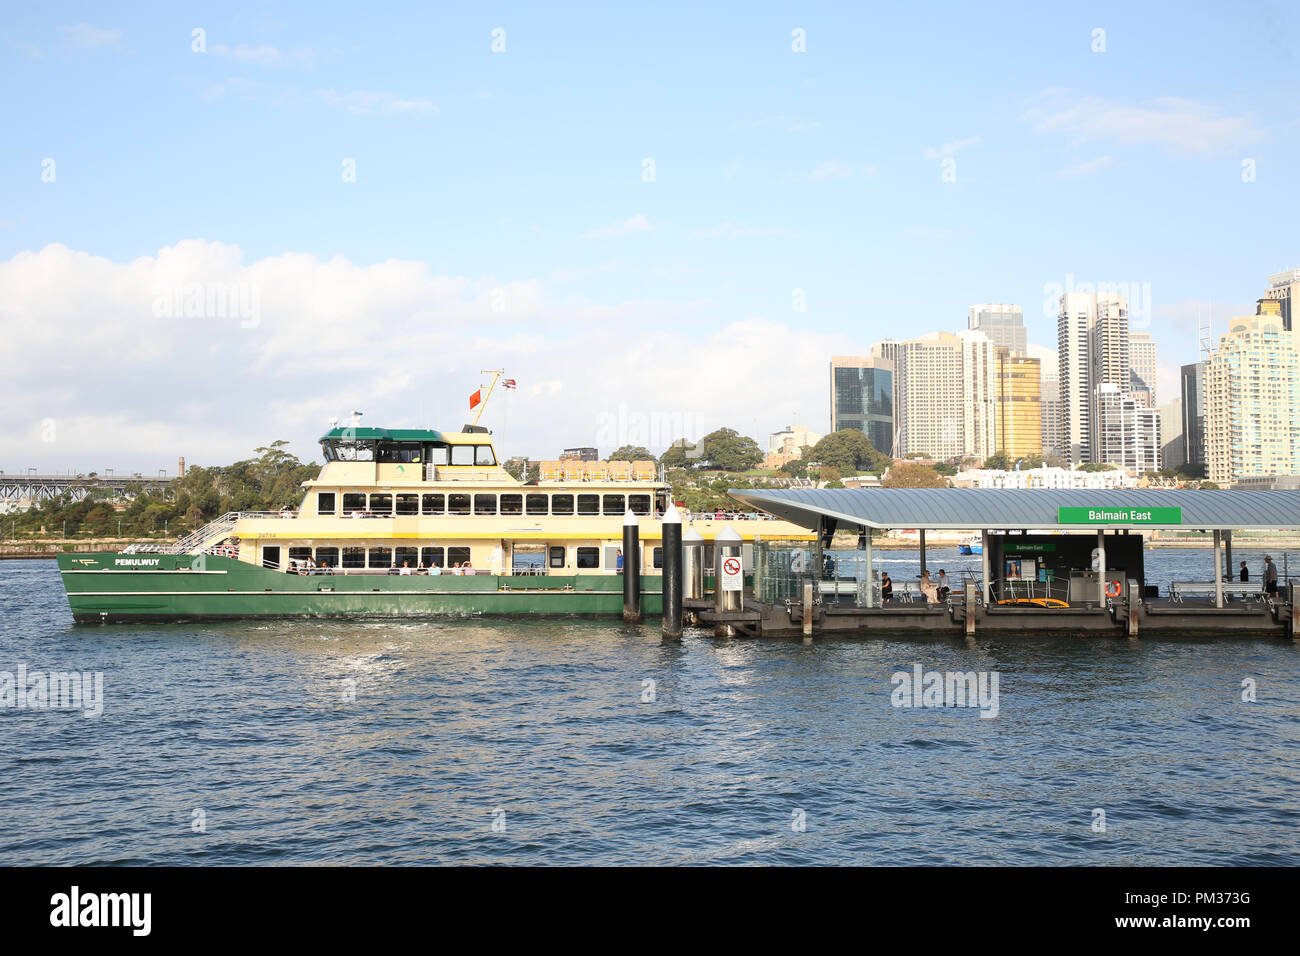 Balmain East ferry wharf in Sydney, Australia Stock - Alamy